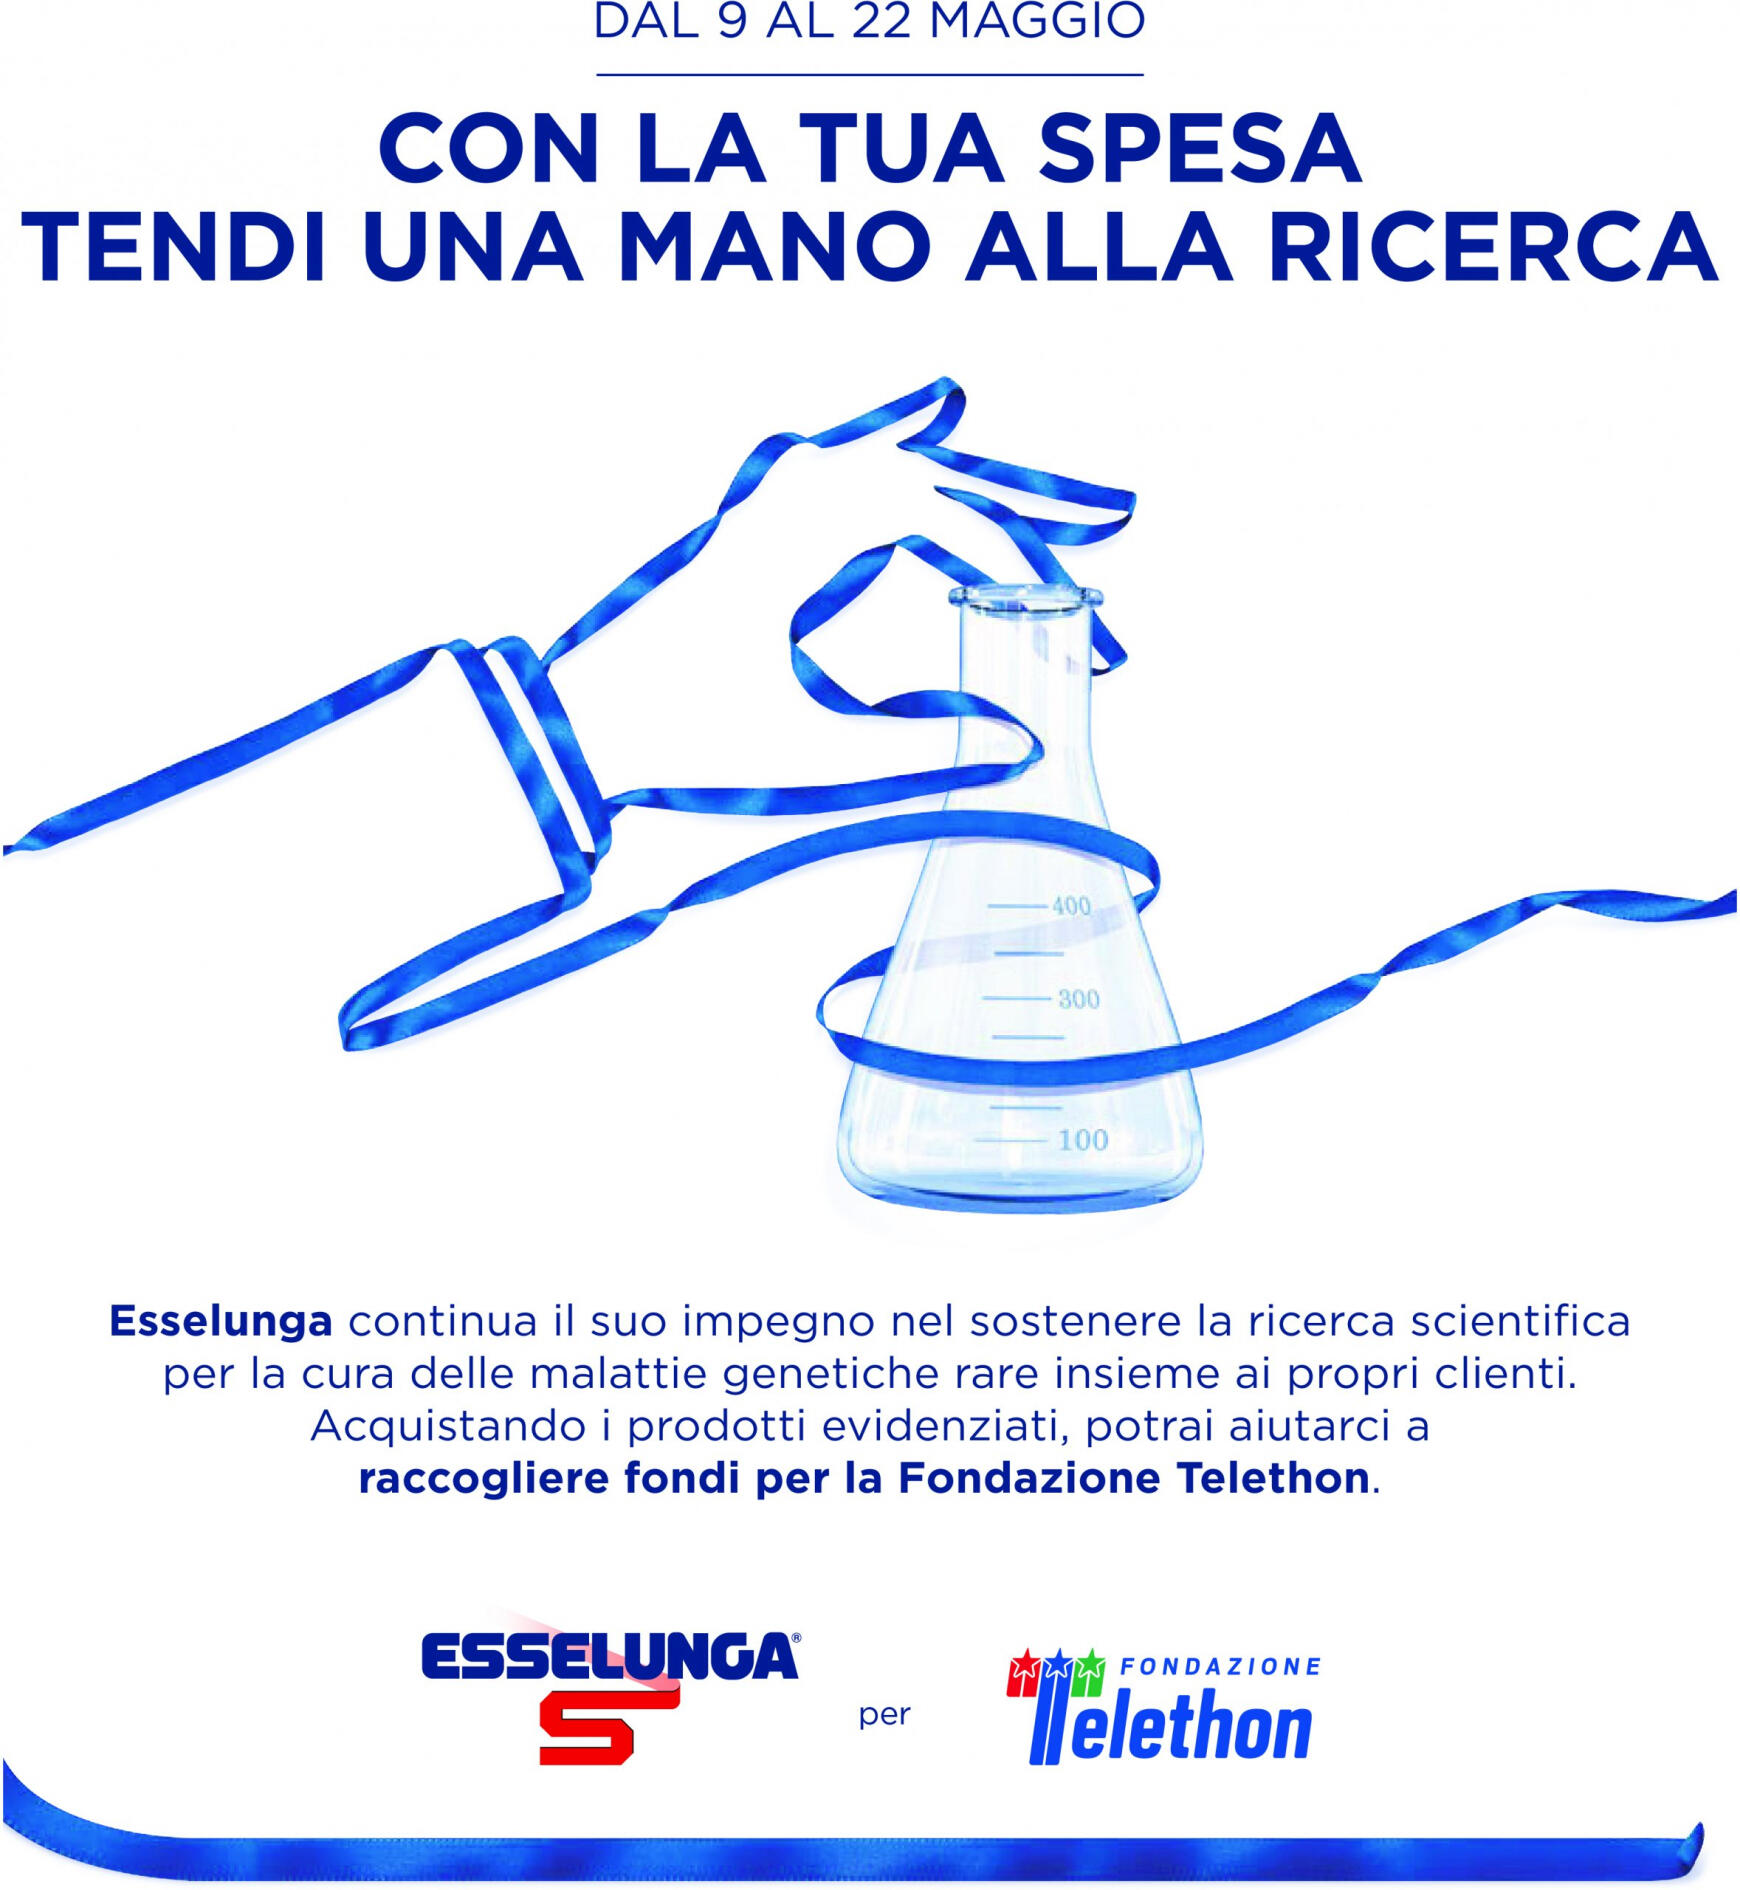 esselunga - Nuovo volantino Esselunga - Donazione Per Telethon 09.05. - 22.05. - page: 1